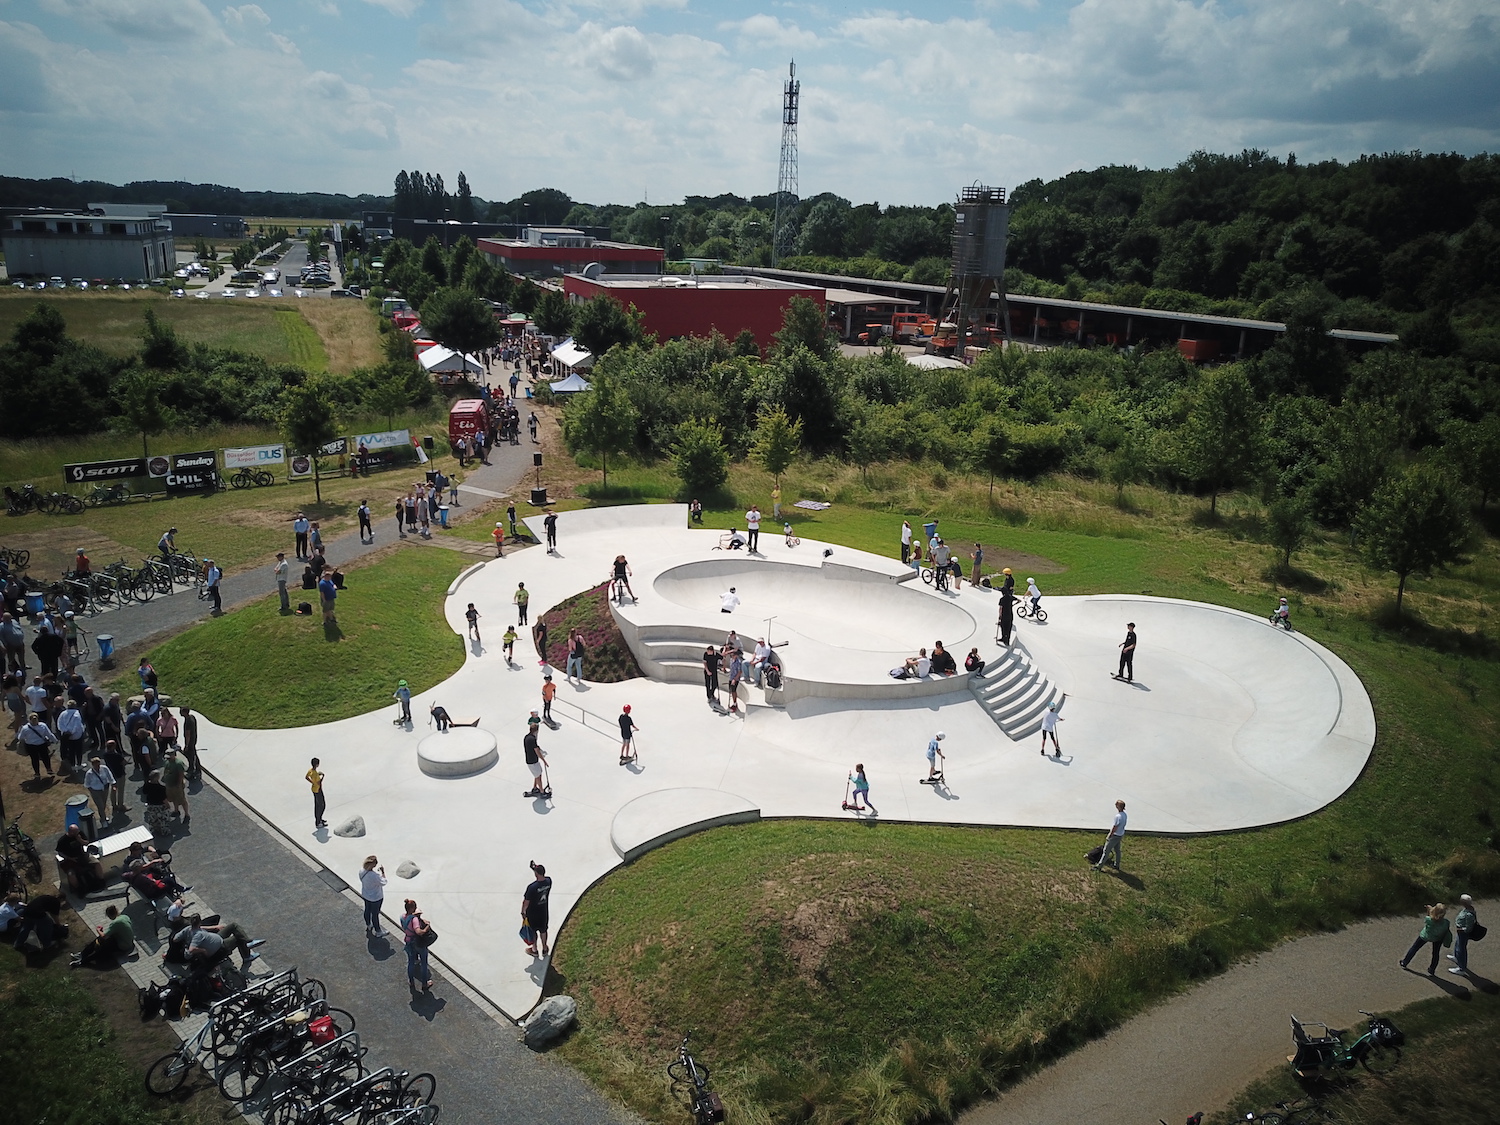 Meerbusch skatepark